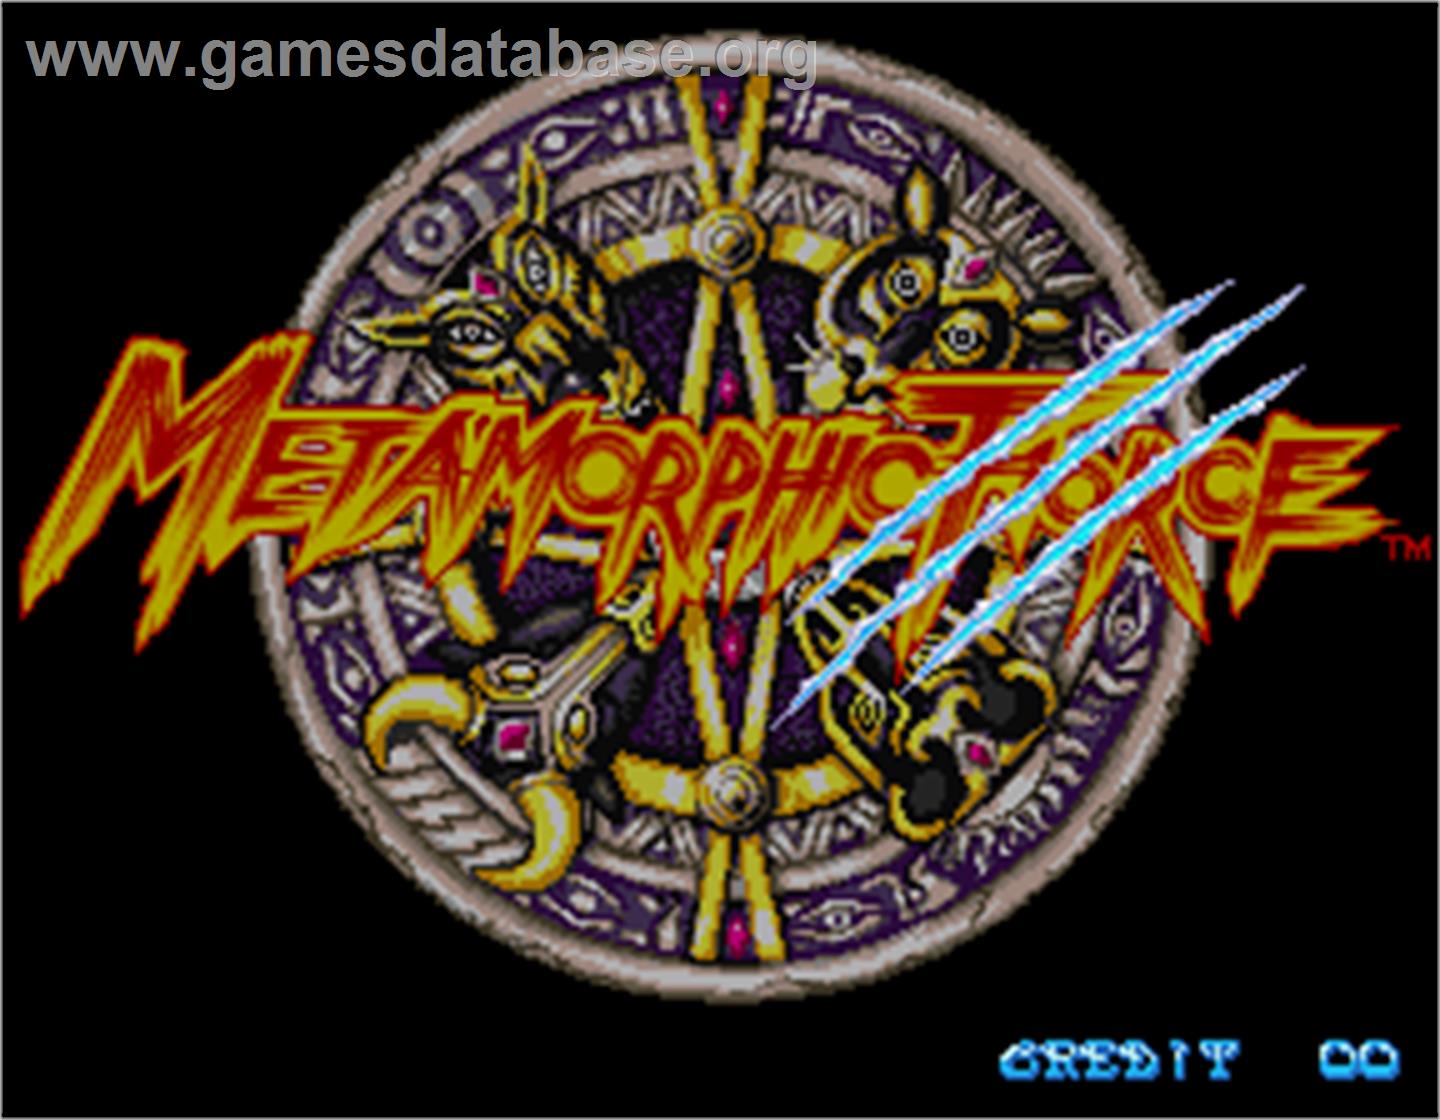 Metamorphic Force - Arcade - Artwork - Title Screen